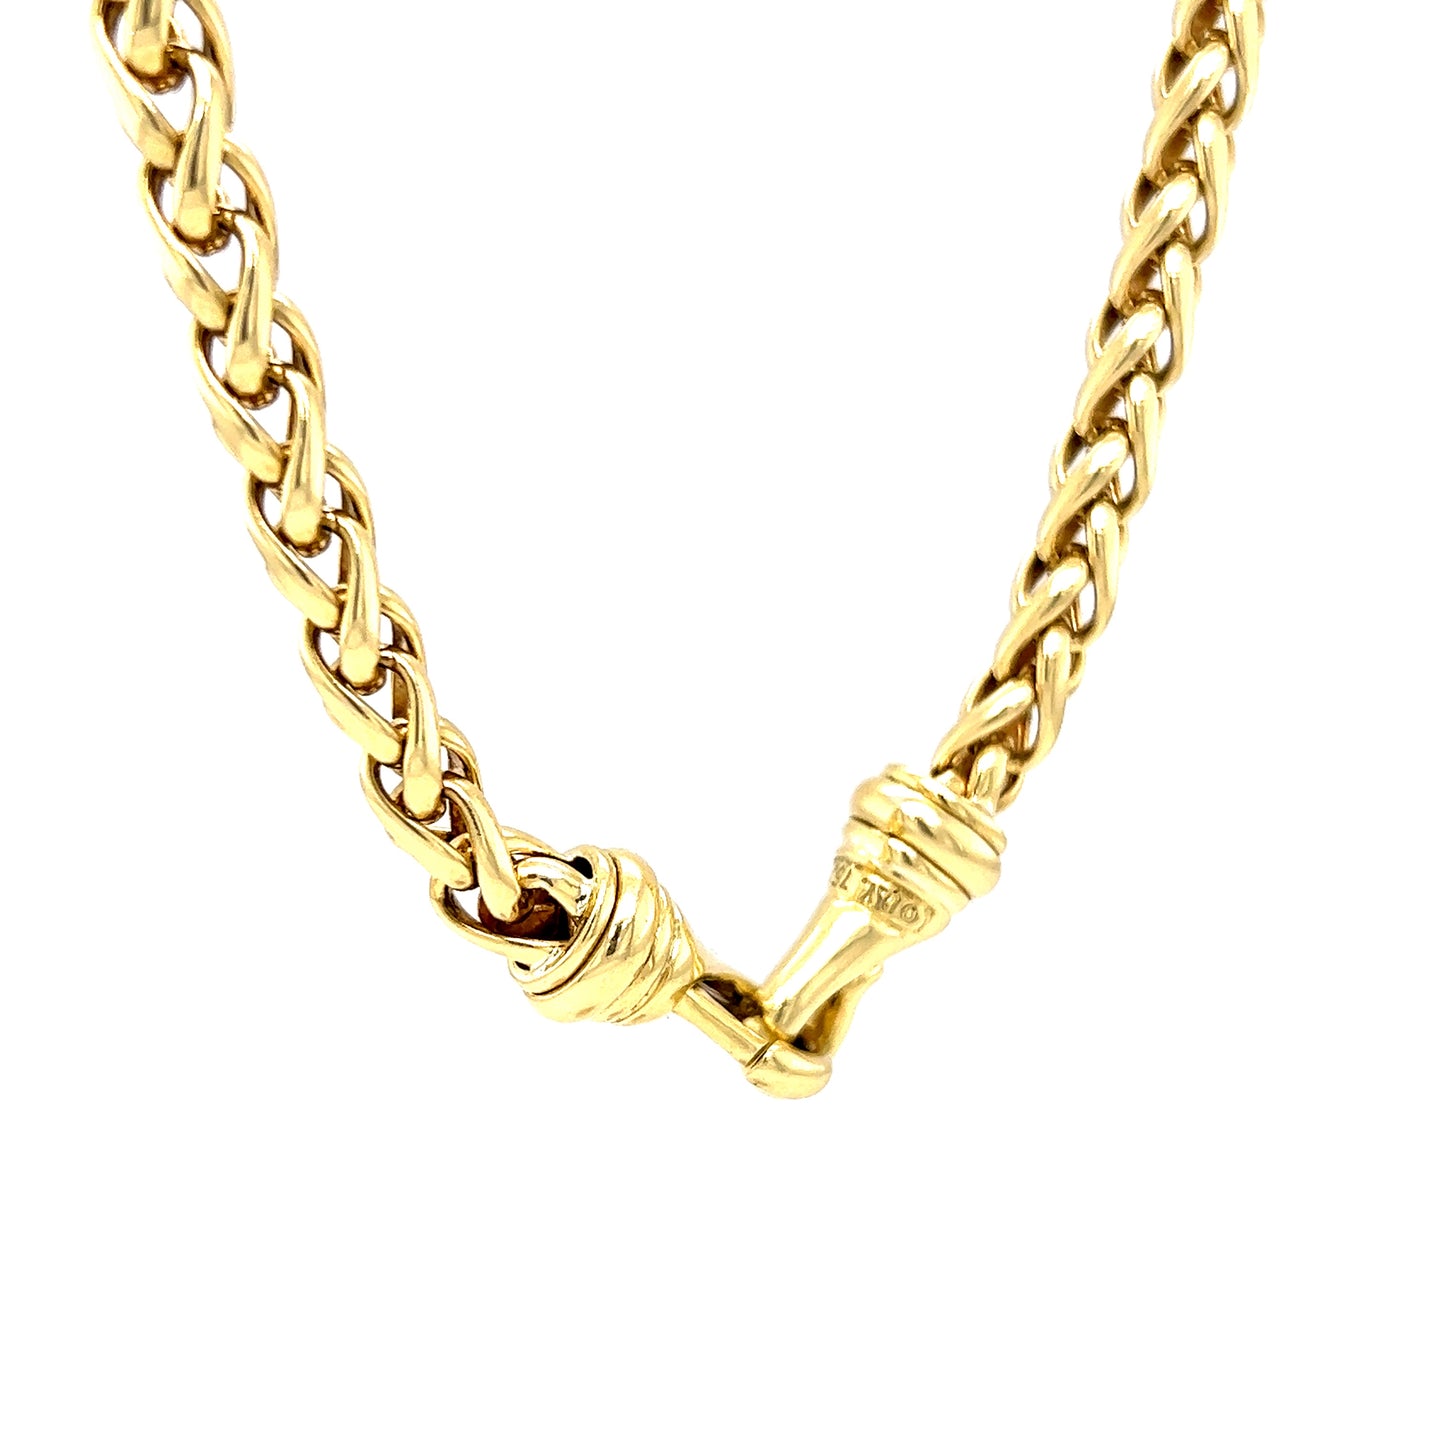 Yurman 6mm Wheat Chain Necklace in 18k Yellow Gold